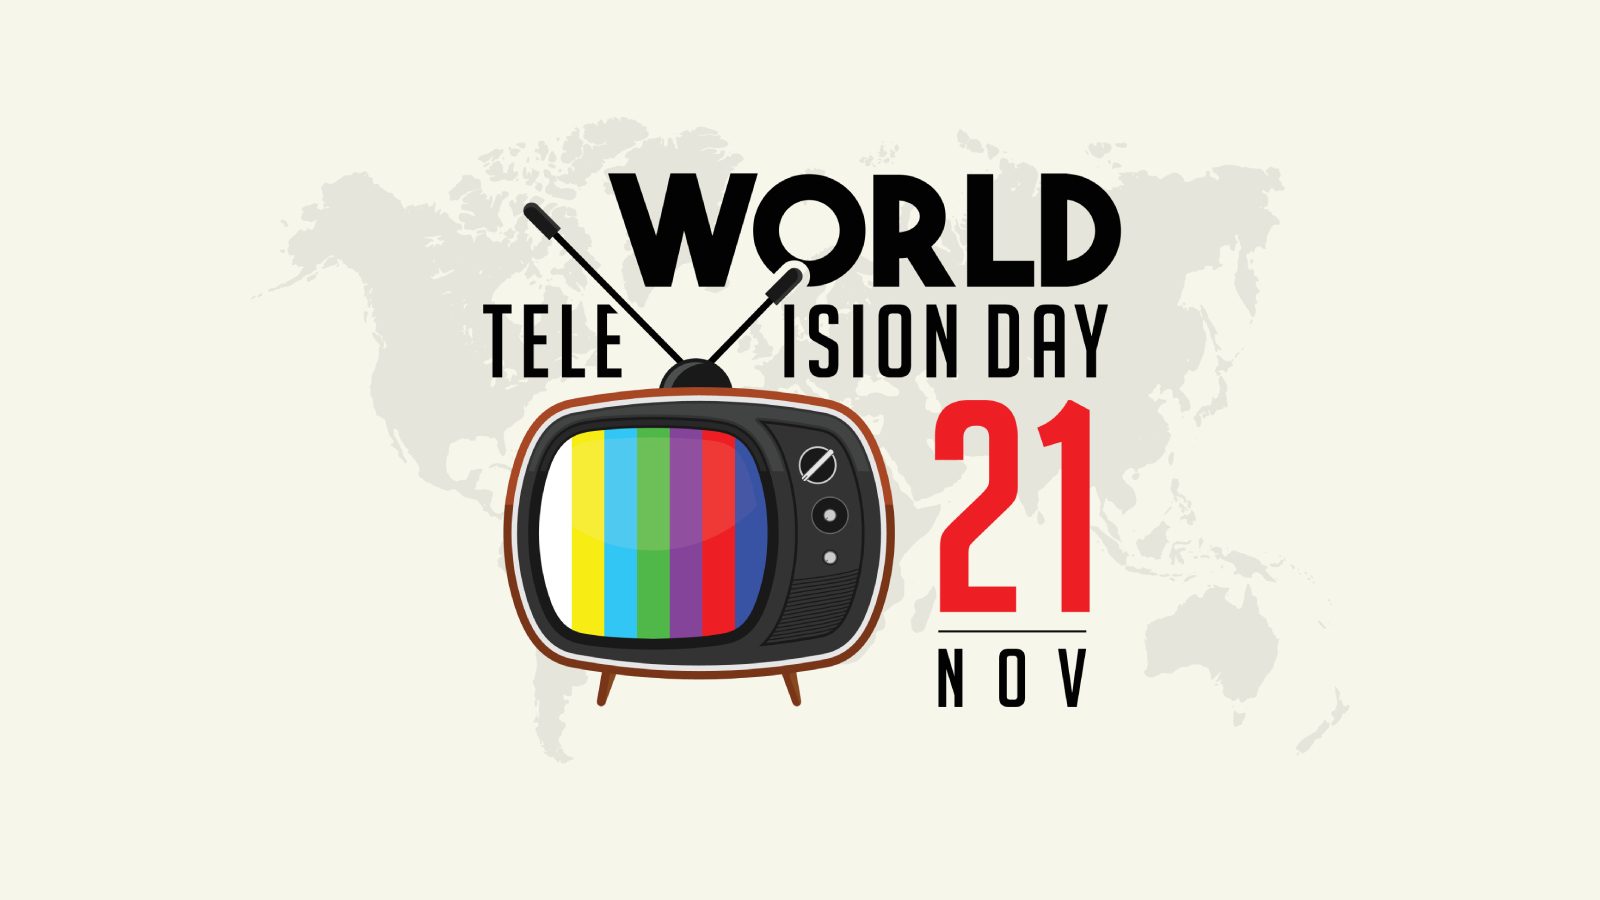 speech on world television day